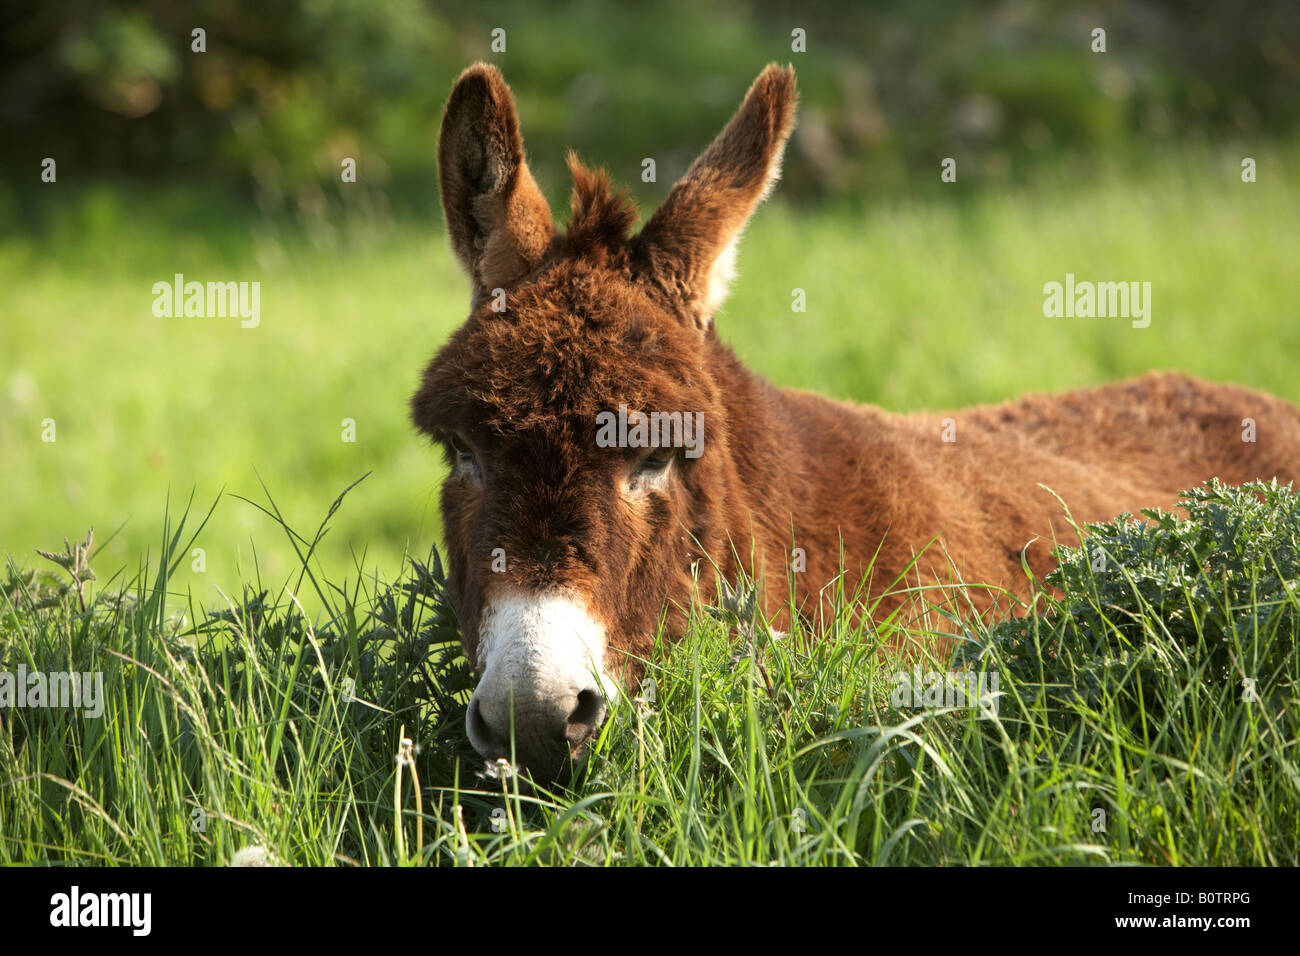 single brown donkey in a field county sligo republic of ireland Stock Photo